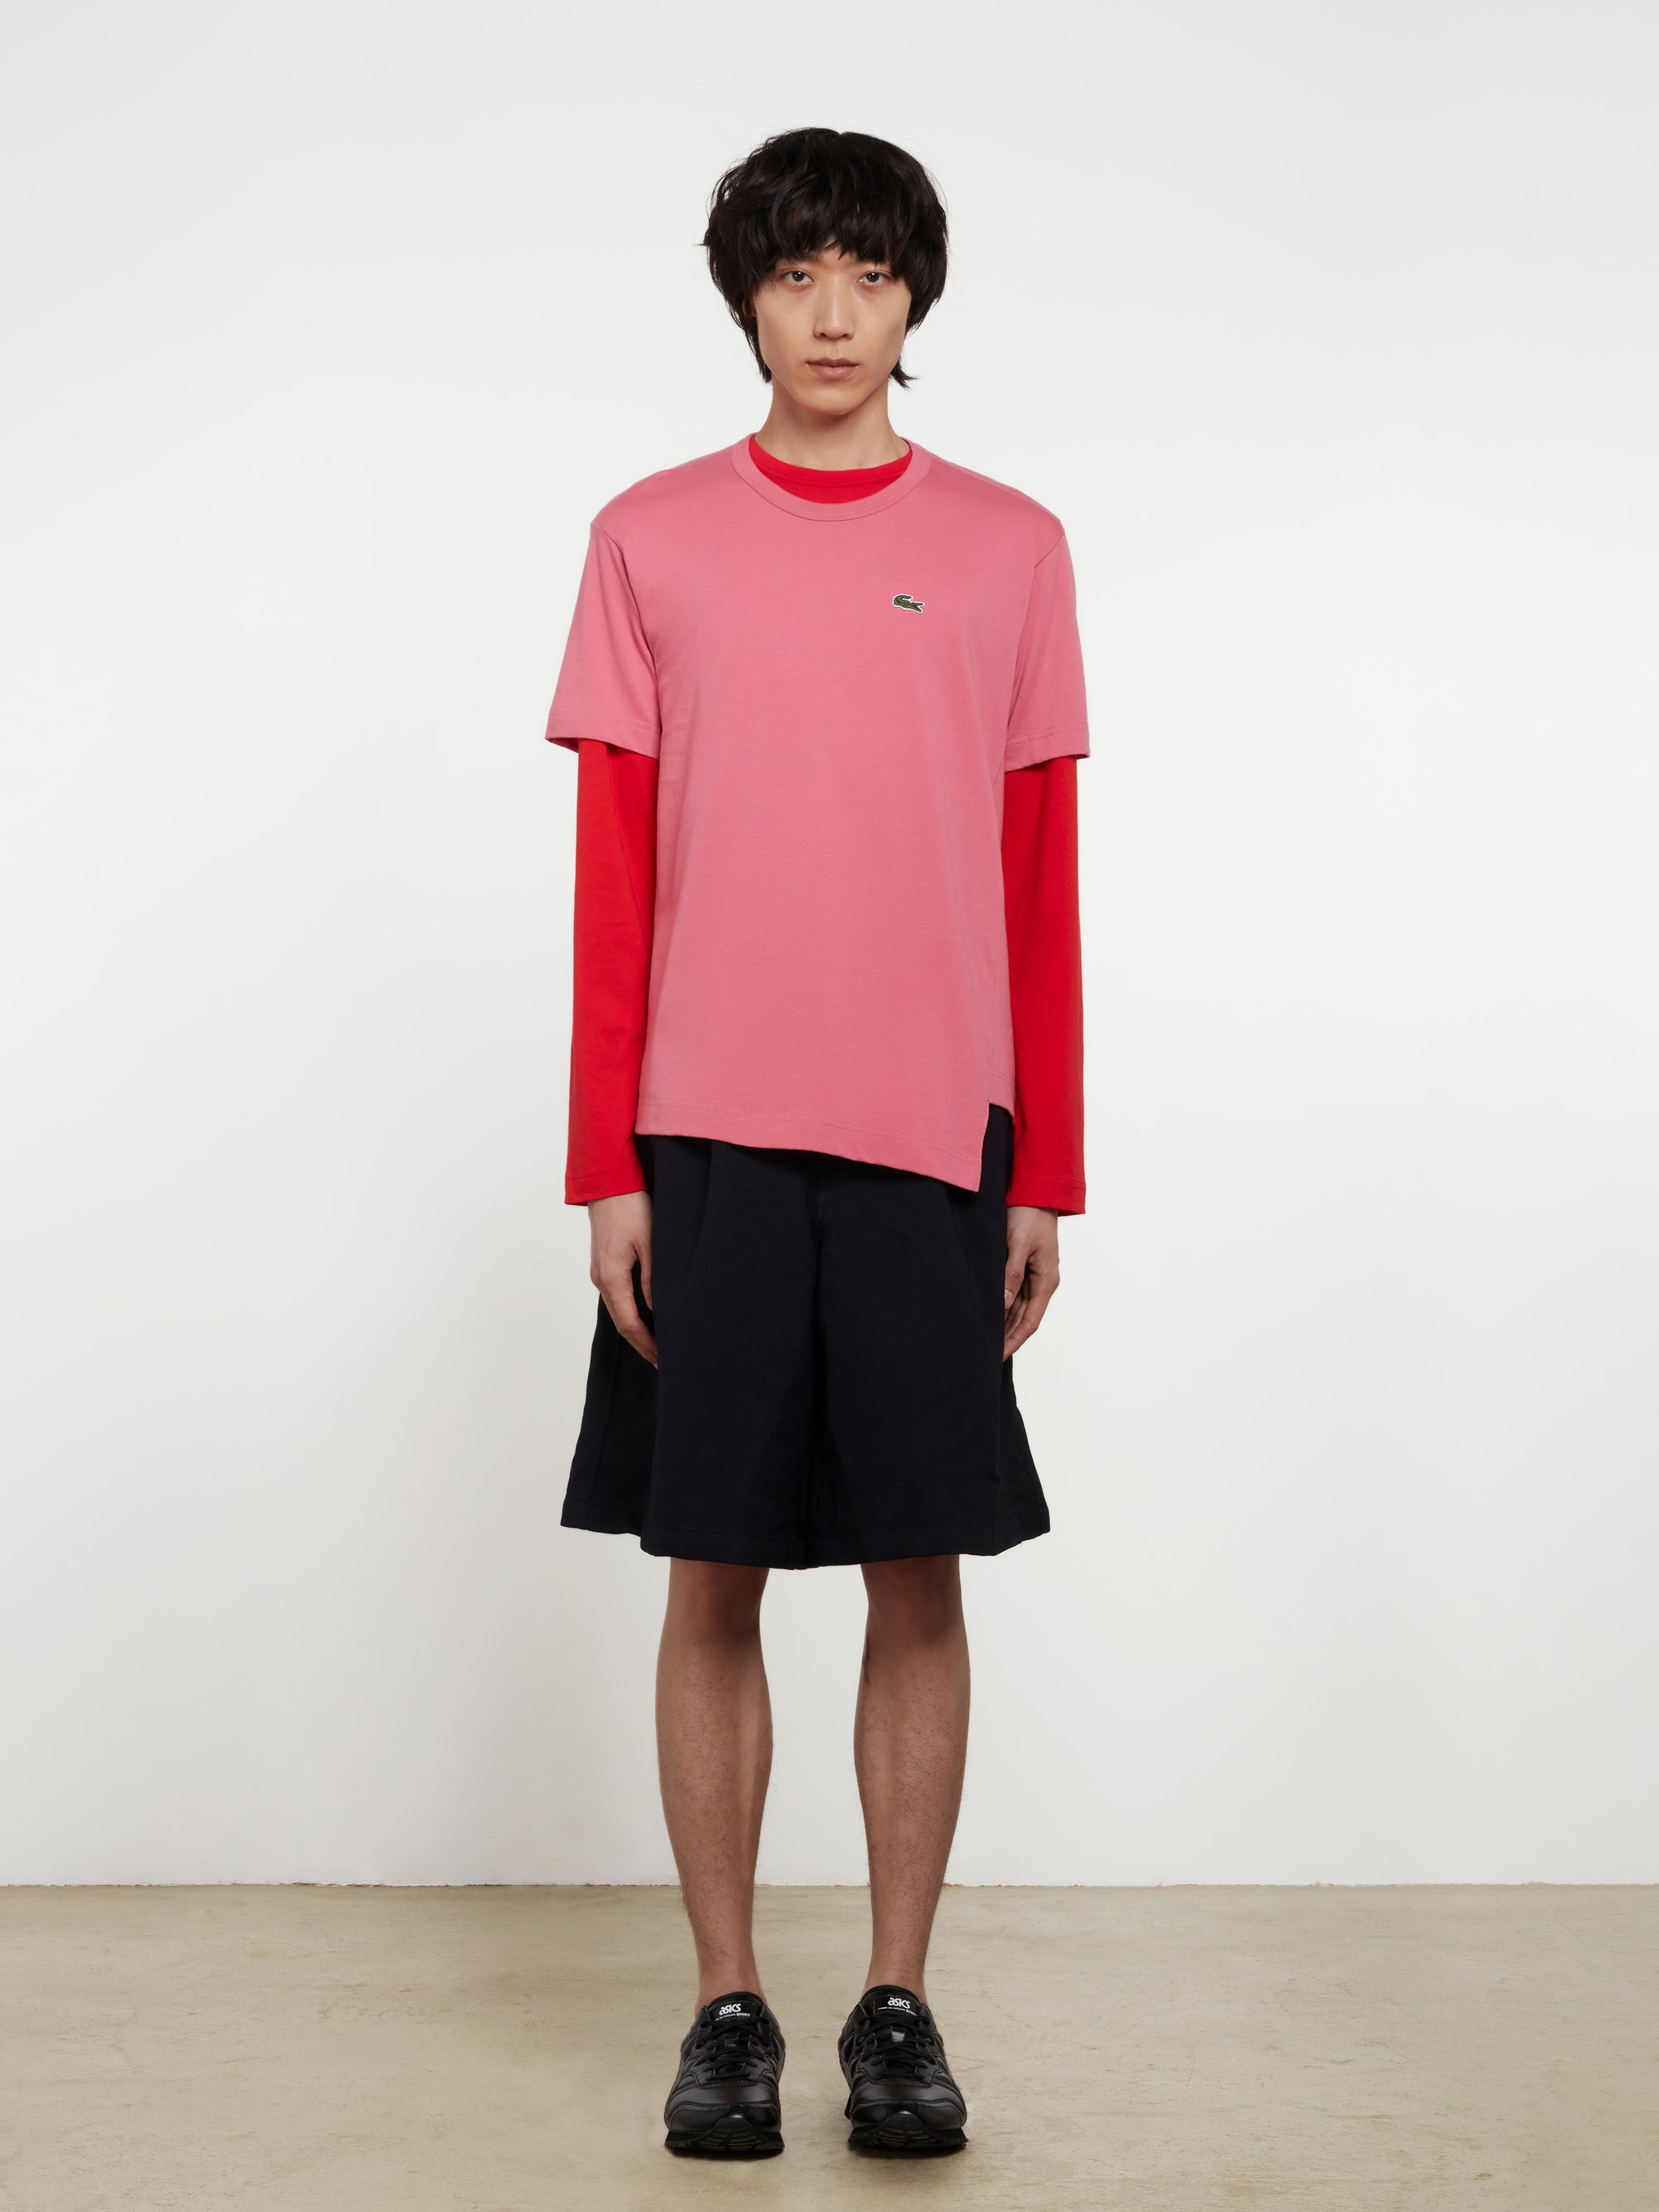 CDG Shirt - Lacoste Men’s T-Shirt - (Pink) view 4